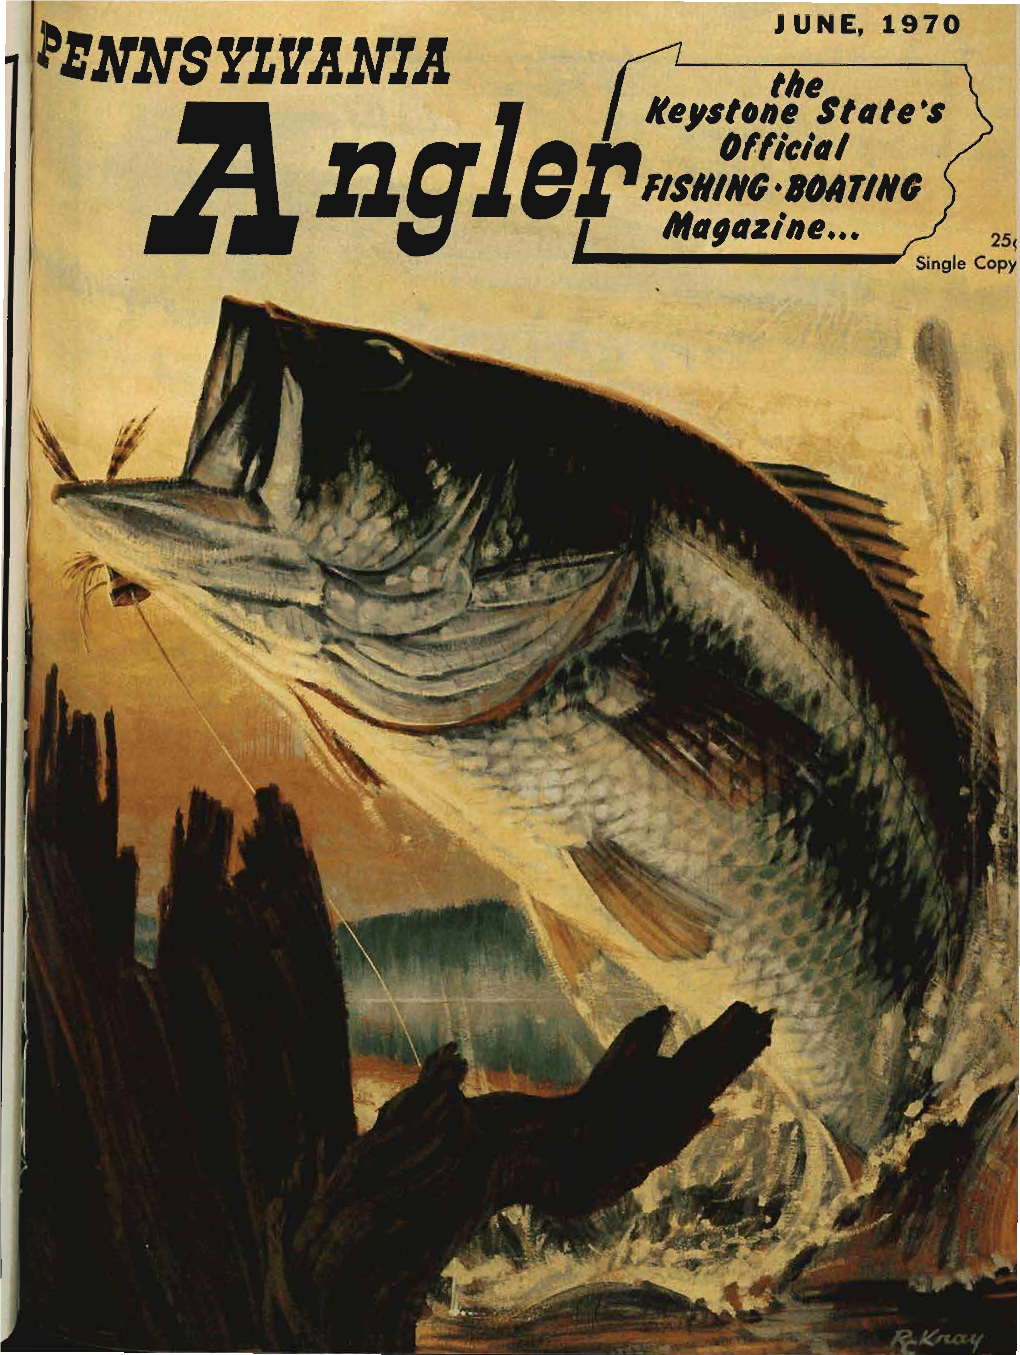 JUNE, 1970 PENNSYLVANIA ~The Keystone State's Official FISHINGBOATING Ihapazin E •